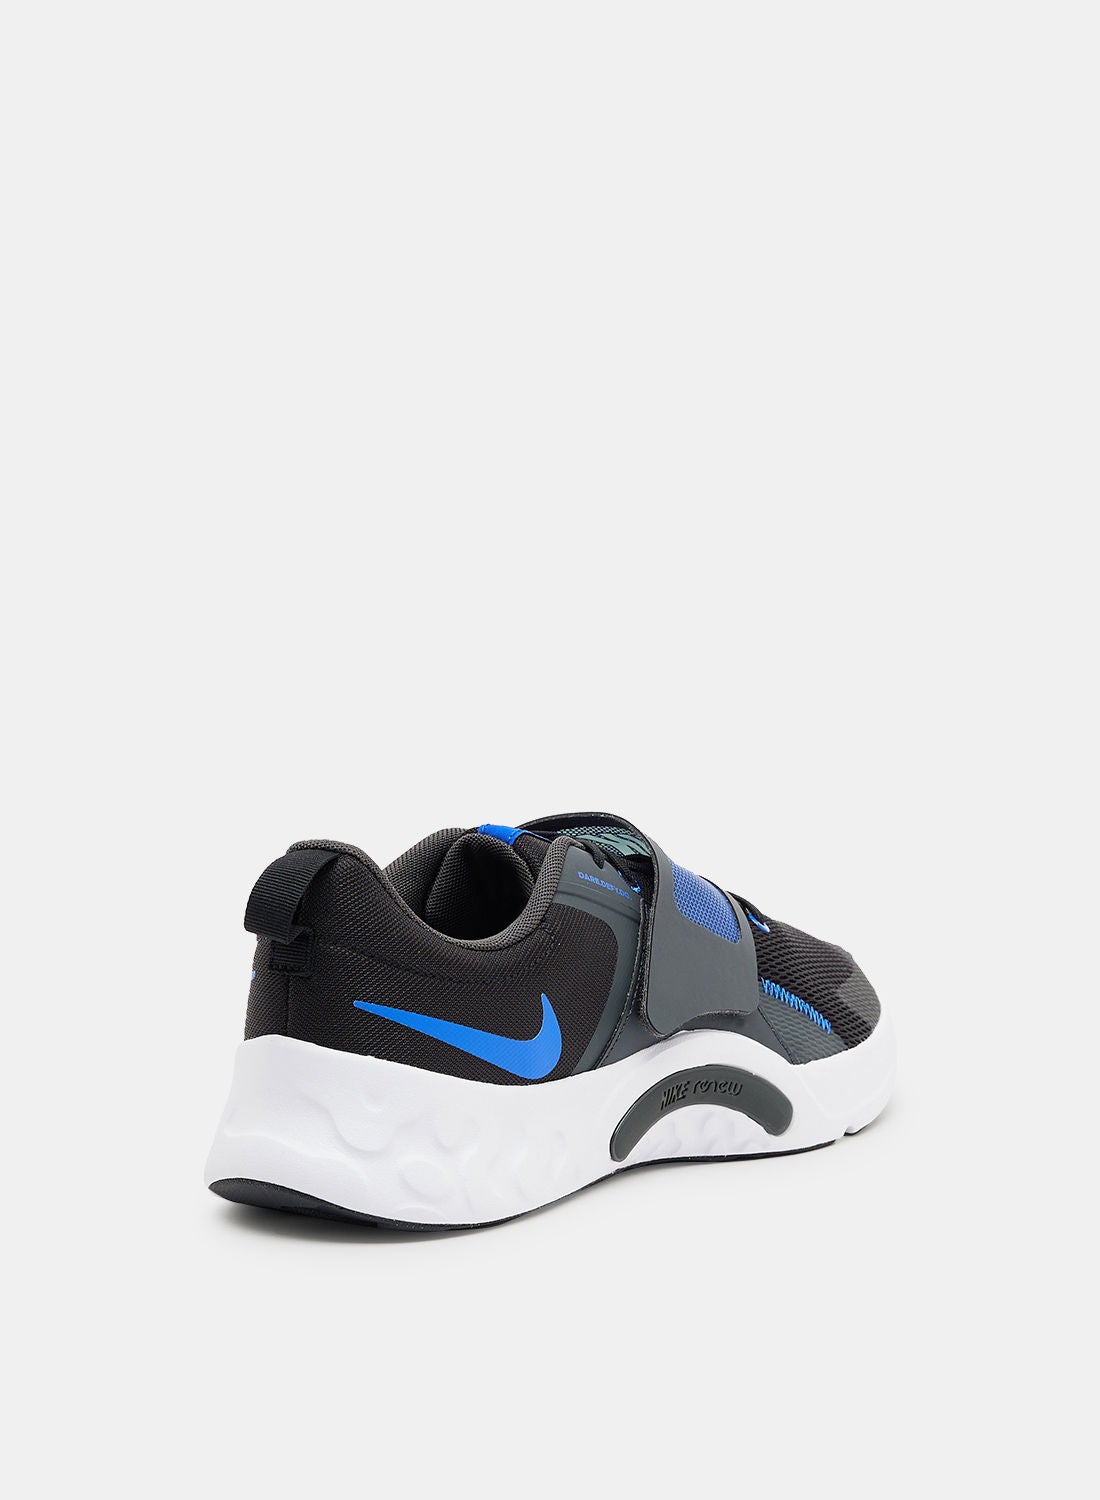 Nike Downshifter 9 Mens Road Running Shoes,Grey (Cool Grey/Metallic  Silver-Wolf Grey),7.5 UK /42 EU price in UAE | Amazon UAE | kanbkam